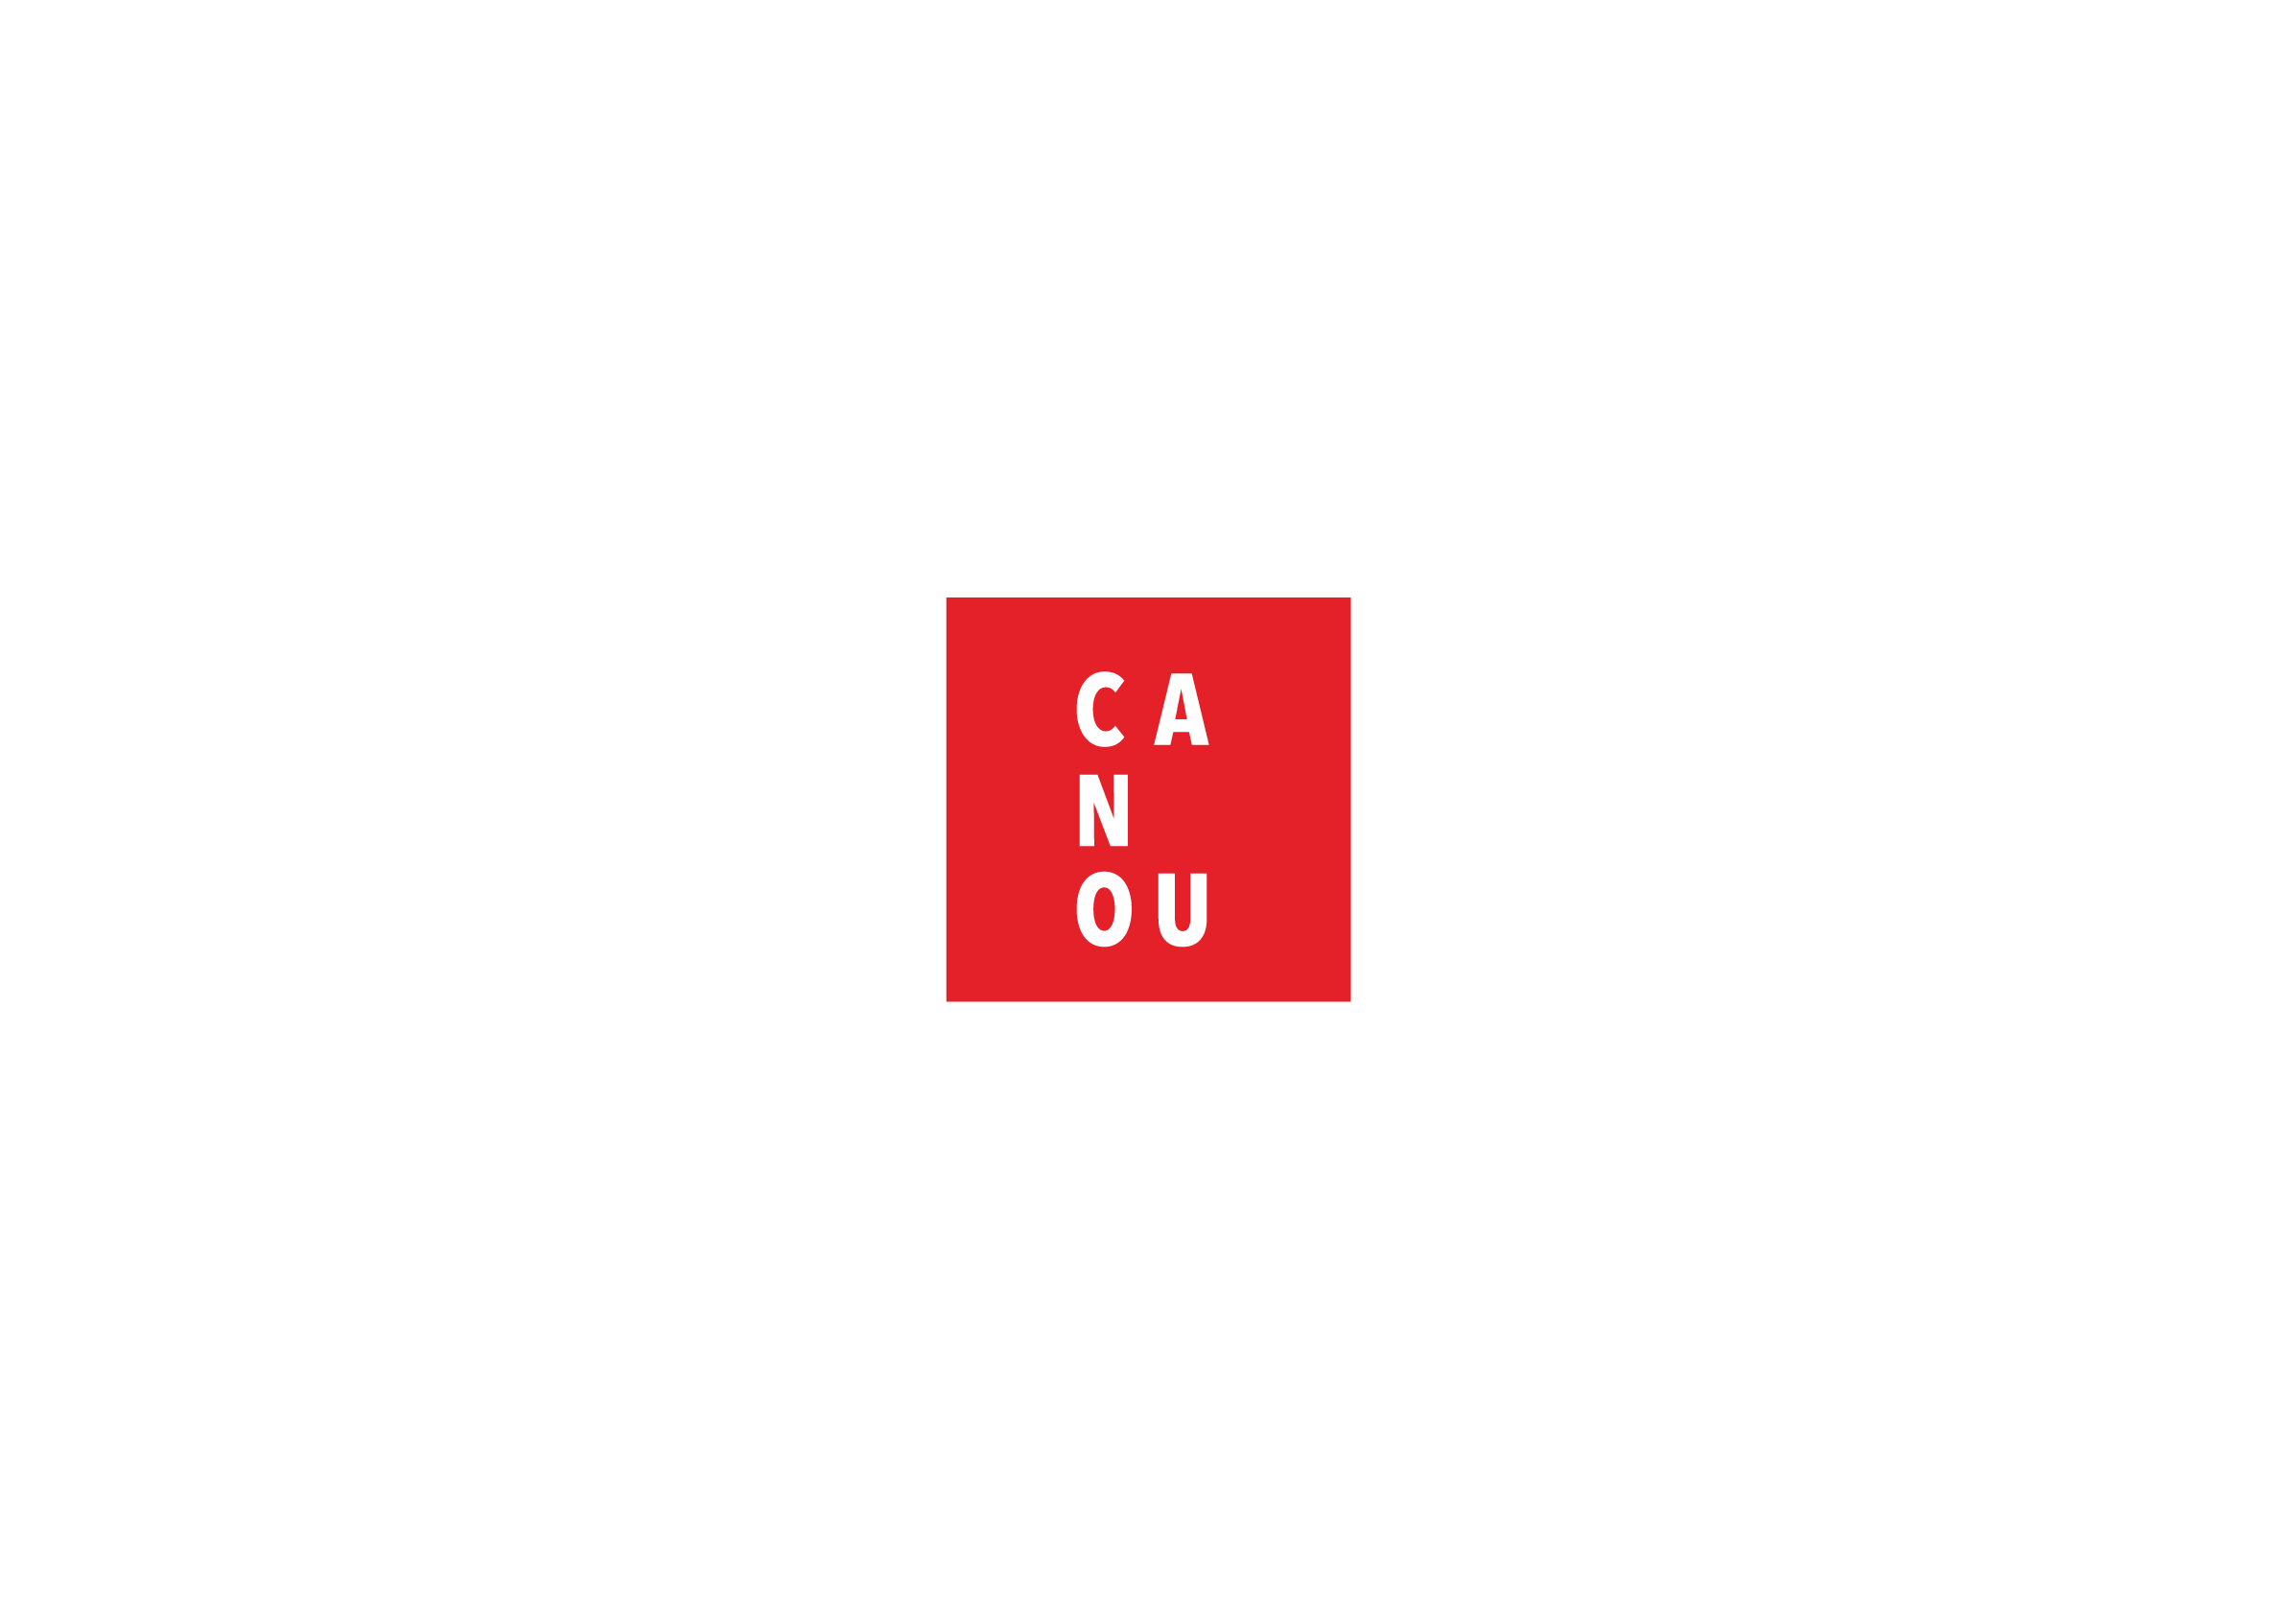 Logo for Canou, a Québec product manufacturer, by Ottawa Graphic Design Studio idApostle